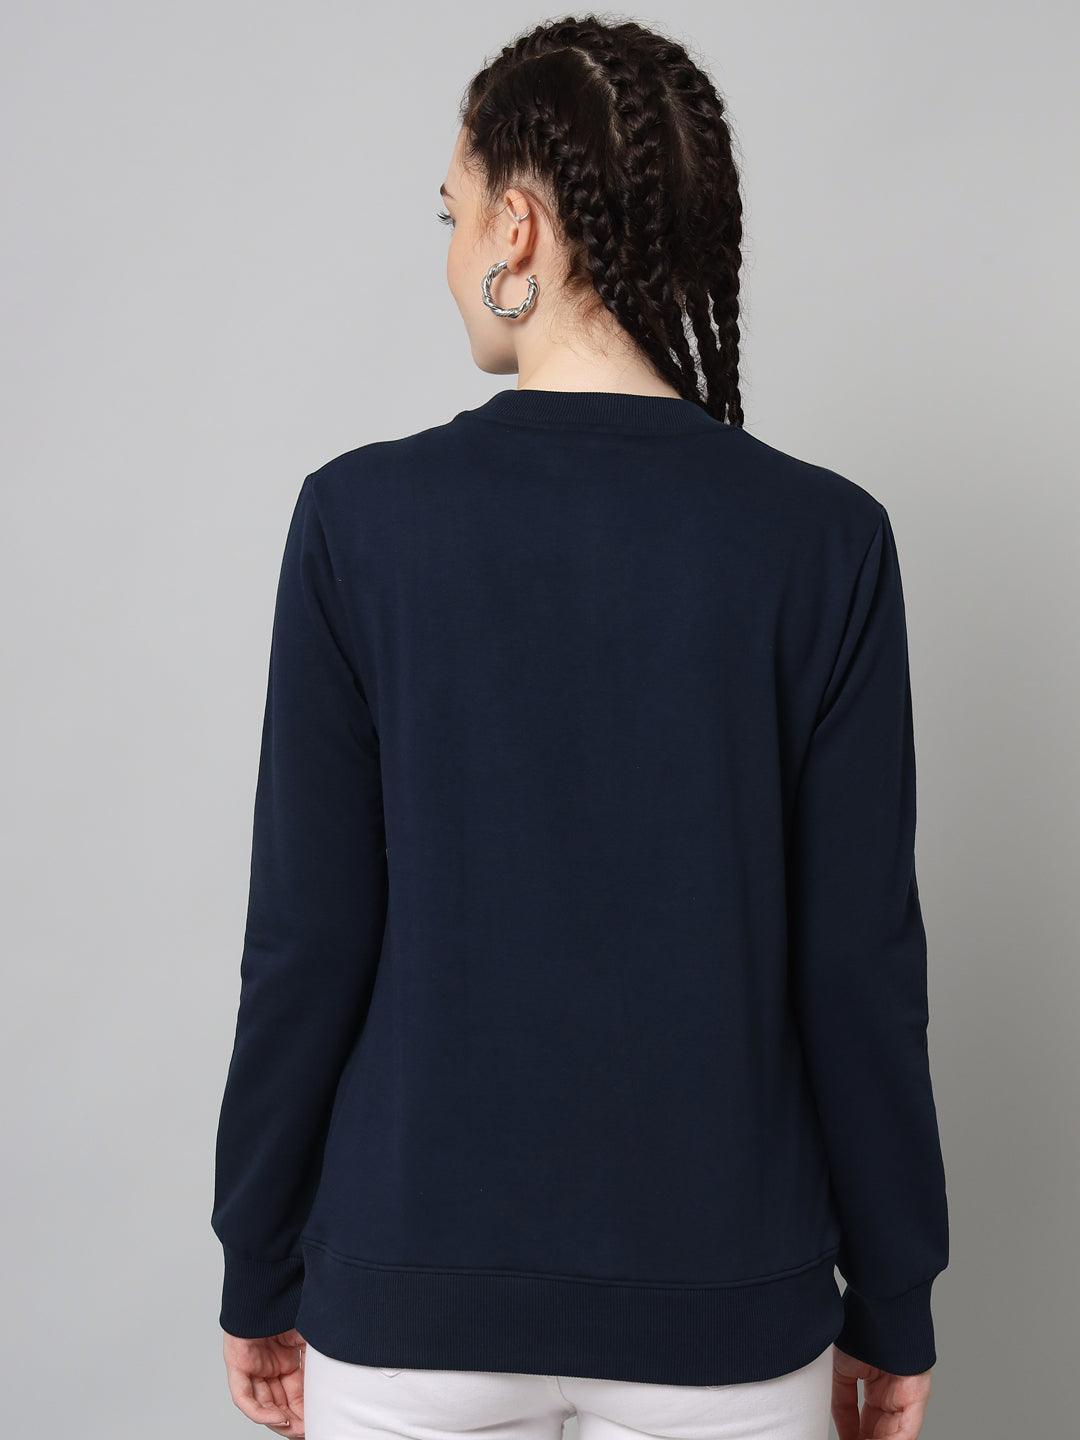 Griffel Women’s Printed Round Neck Navy Cotton Fleece Full Sleeve Sweatshirt - griffel